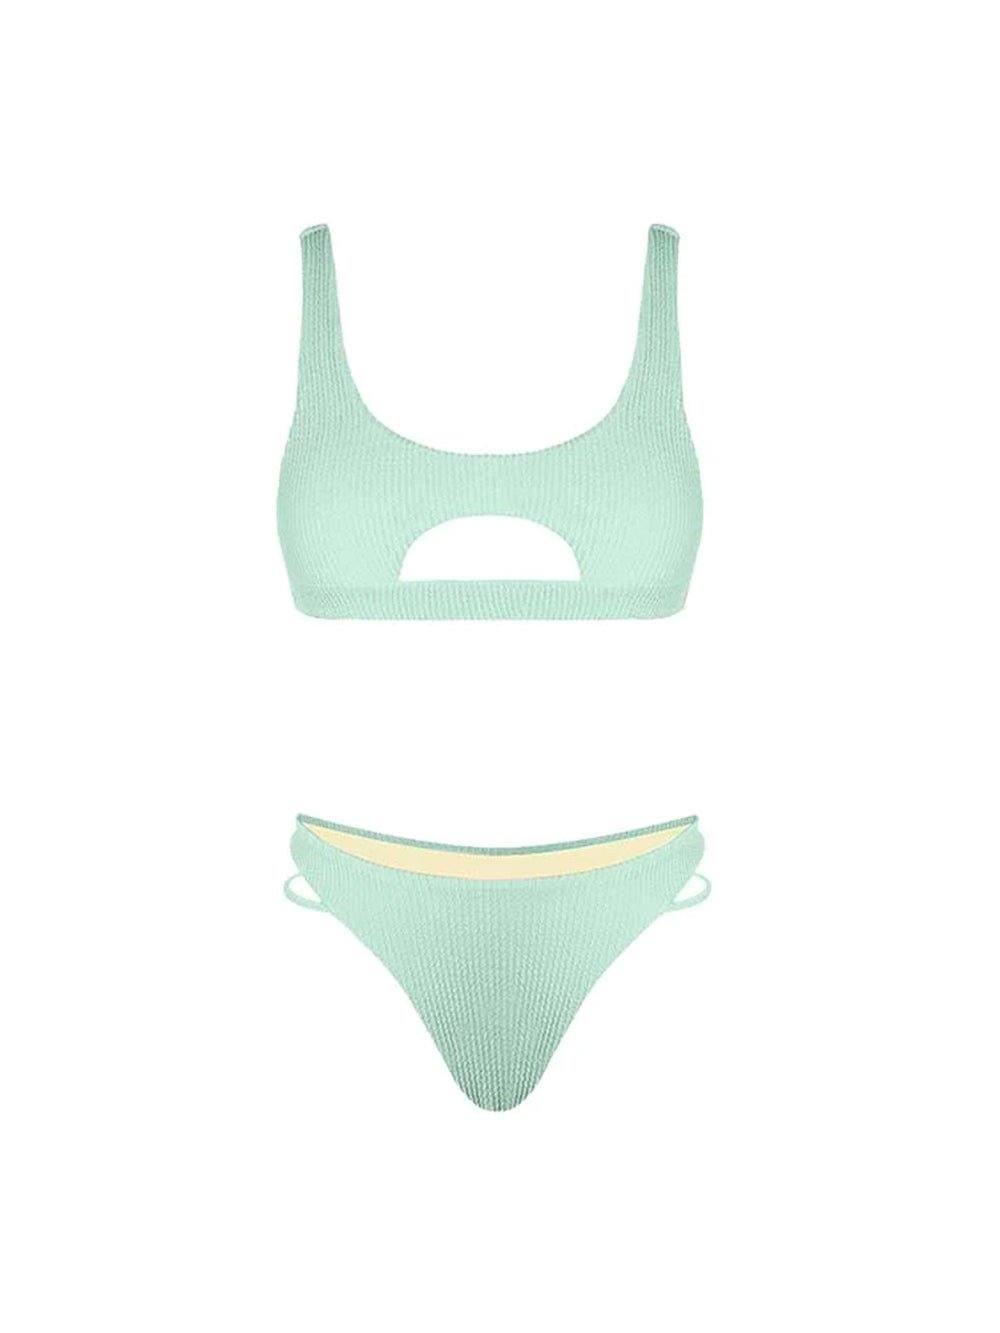 Cut out Fixed Strap Bikini - Mint Green - OCEAN MYSTERY